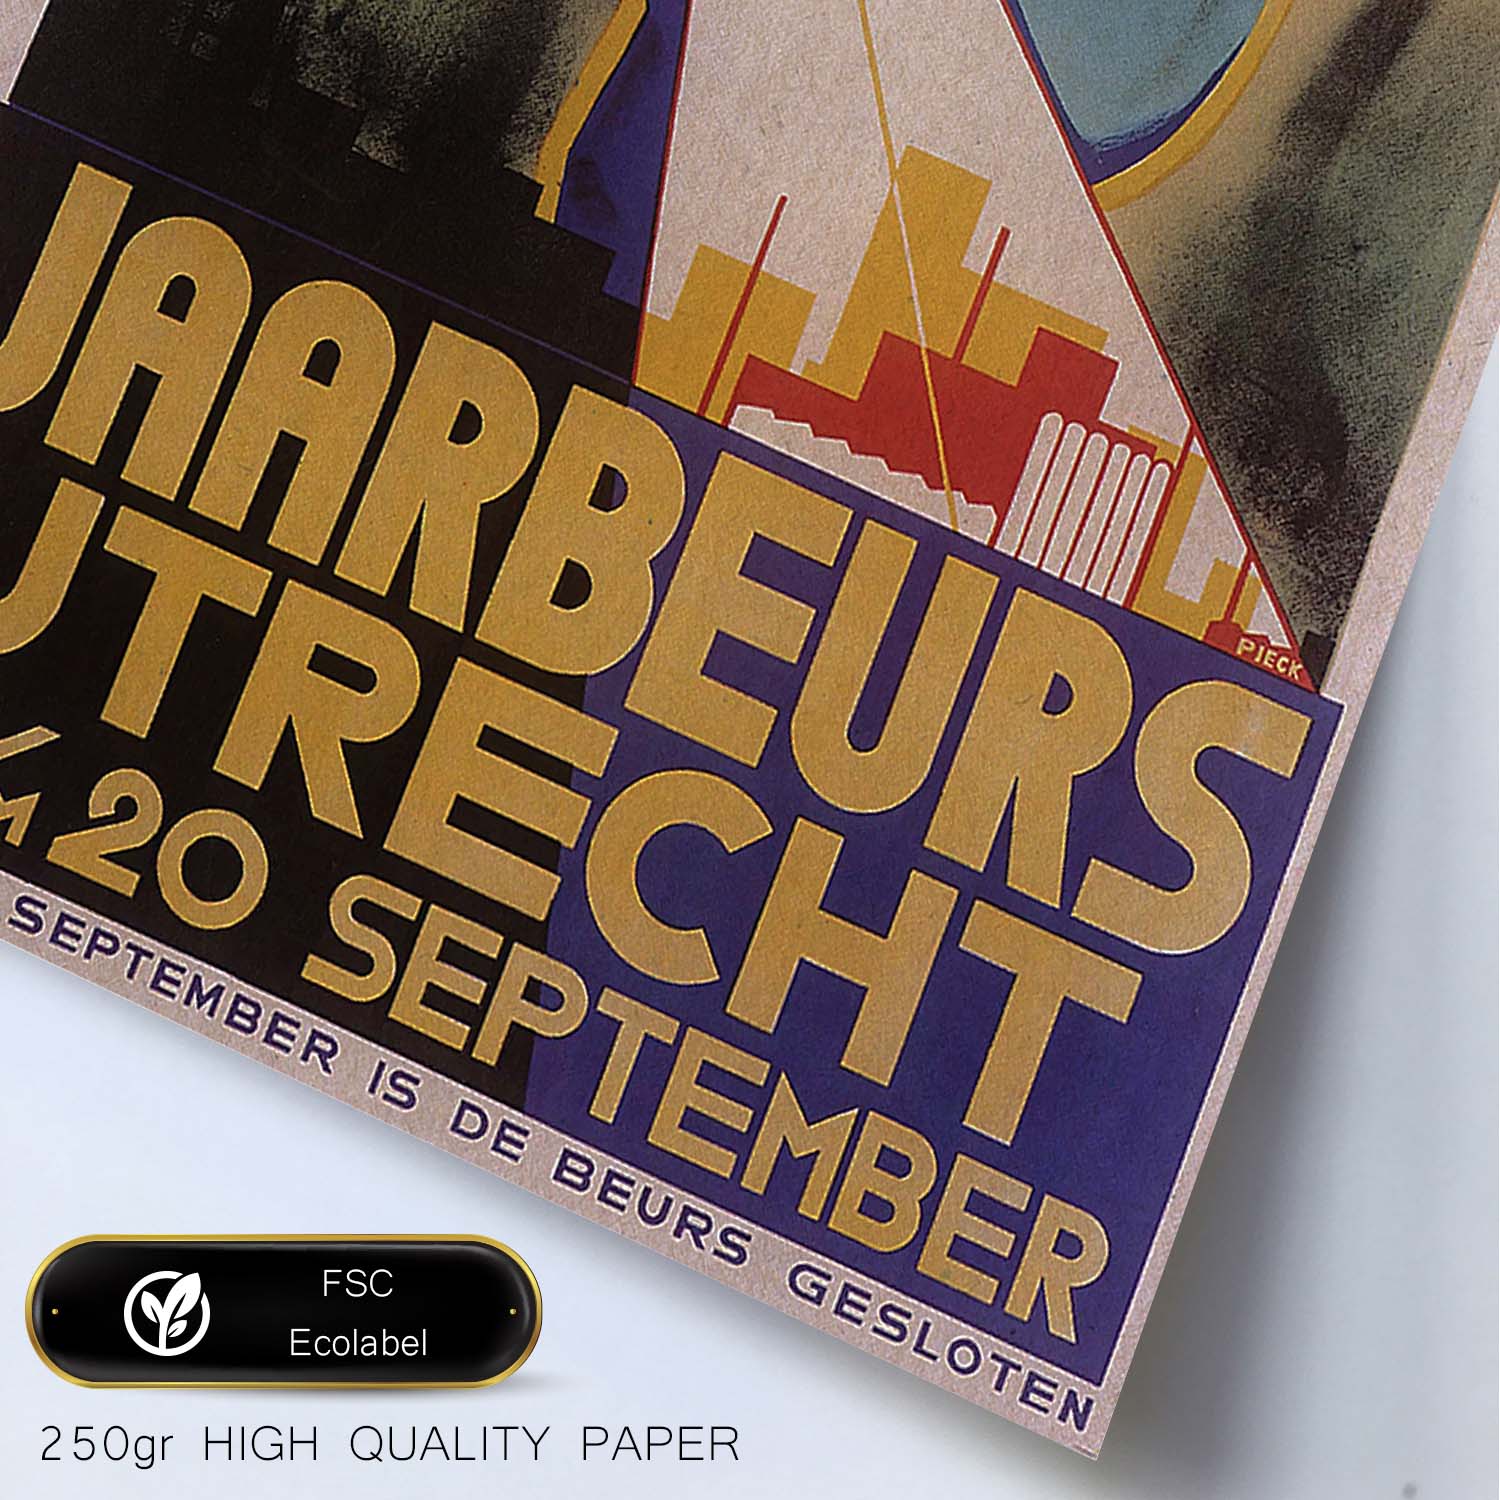 Poster vintage. Cartel Art Deco "Utrecht".-Artwork-Nacnic-Nacnic Estudio SL